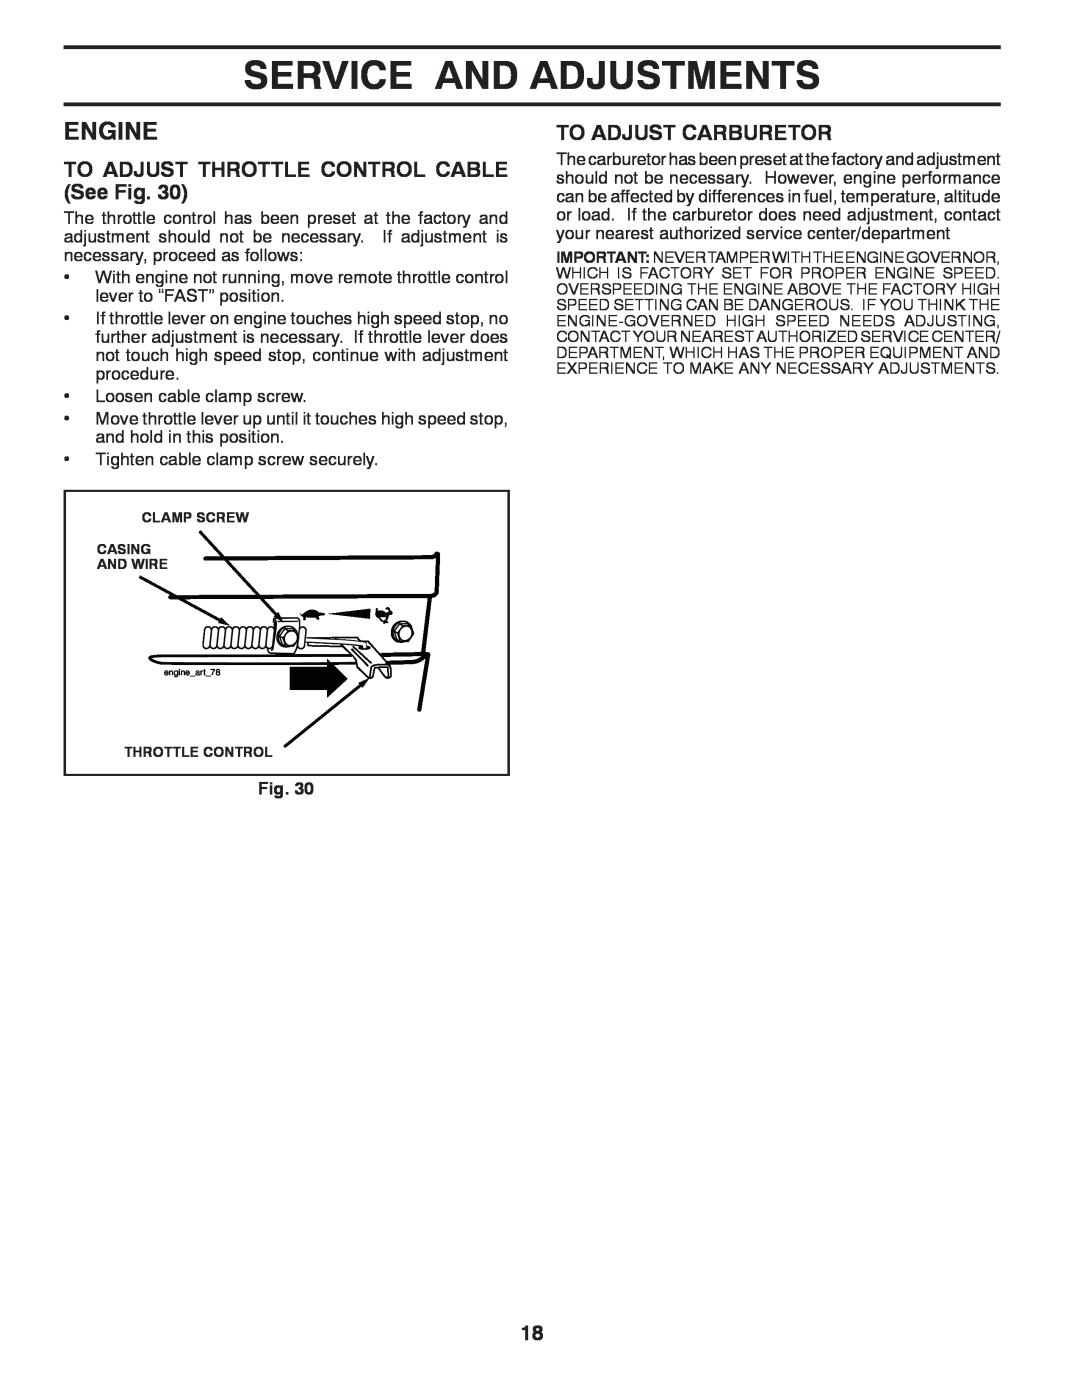 Poulan DRT900, 433154 manual TO ADJUST THROTTLE CONTROL CABLE See Fig, To Adjust Carburetor, Service And Adjustments, Engine 